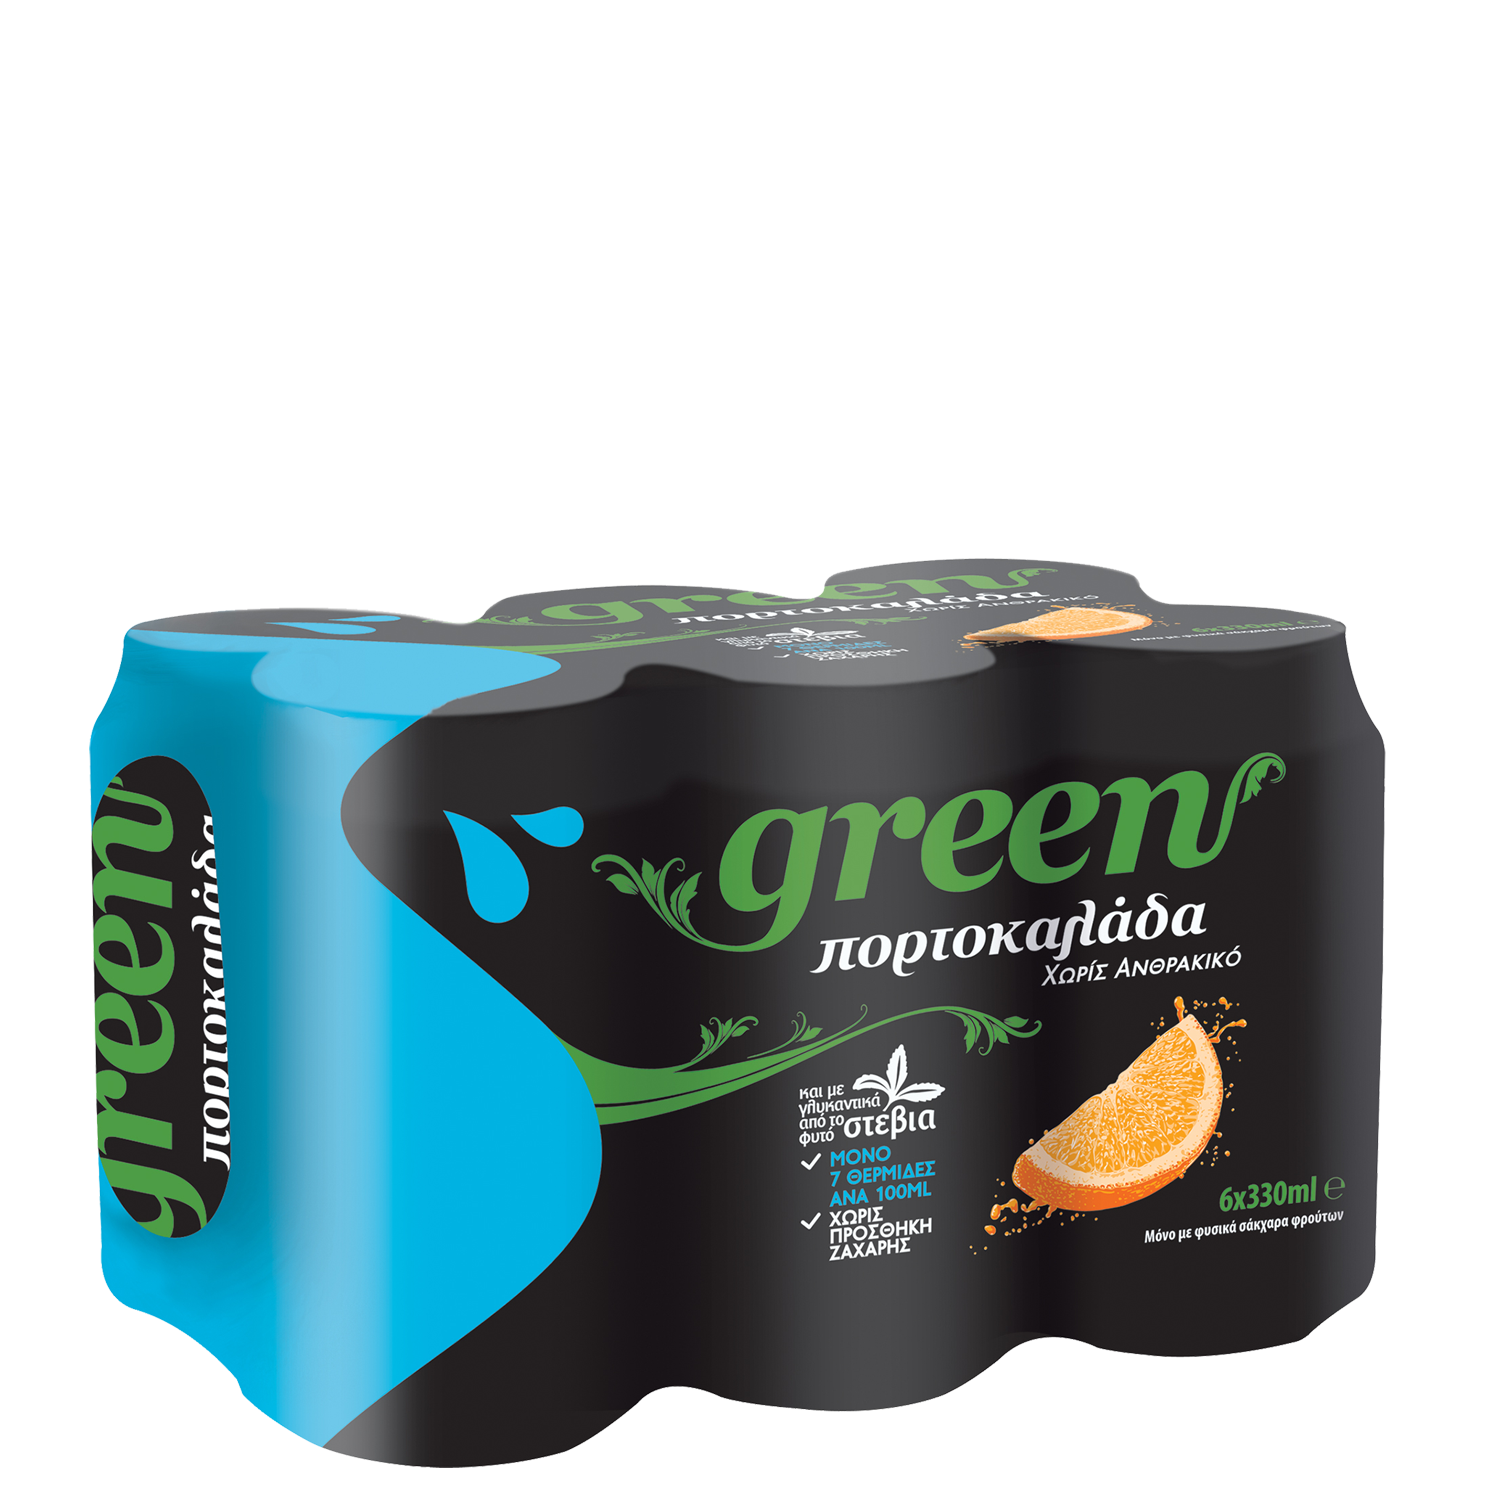 Green Orange Nc - Multi Pack - (6x330ml cans)